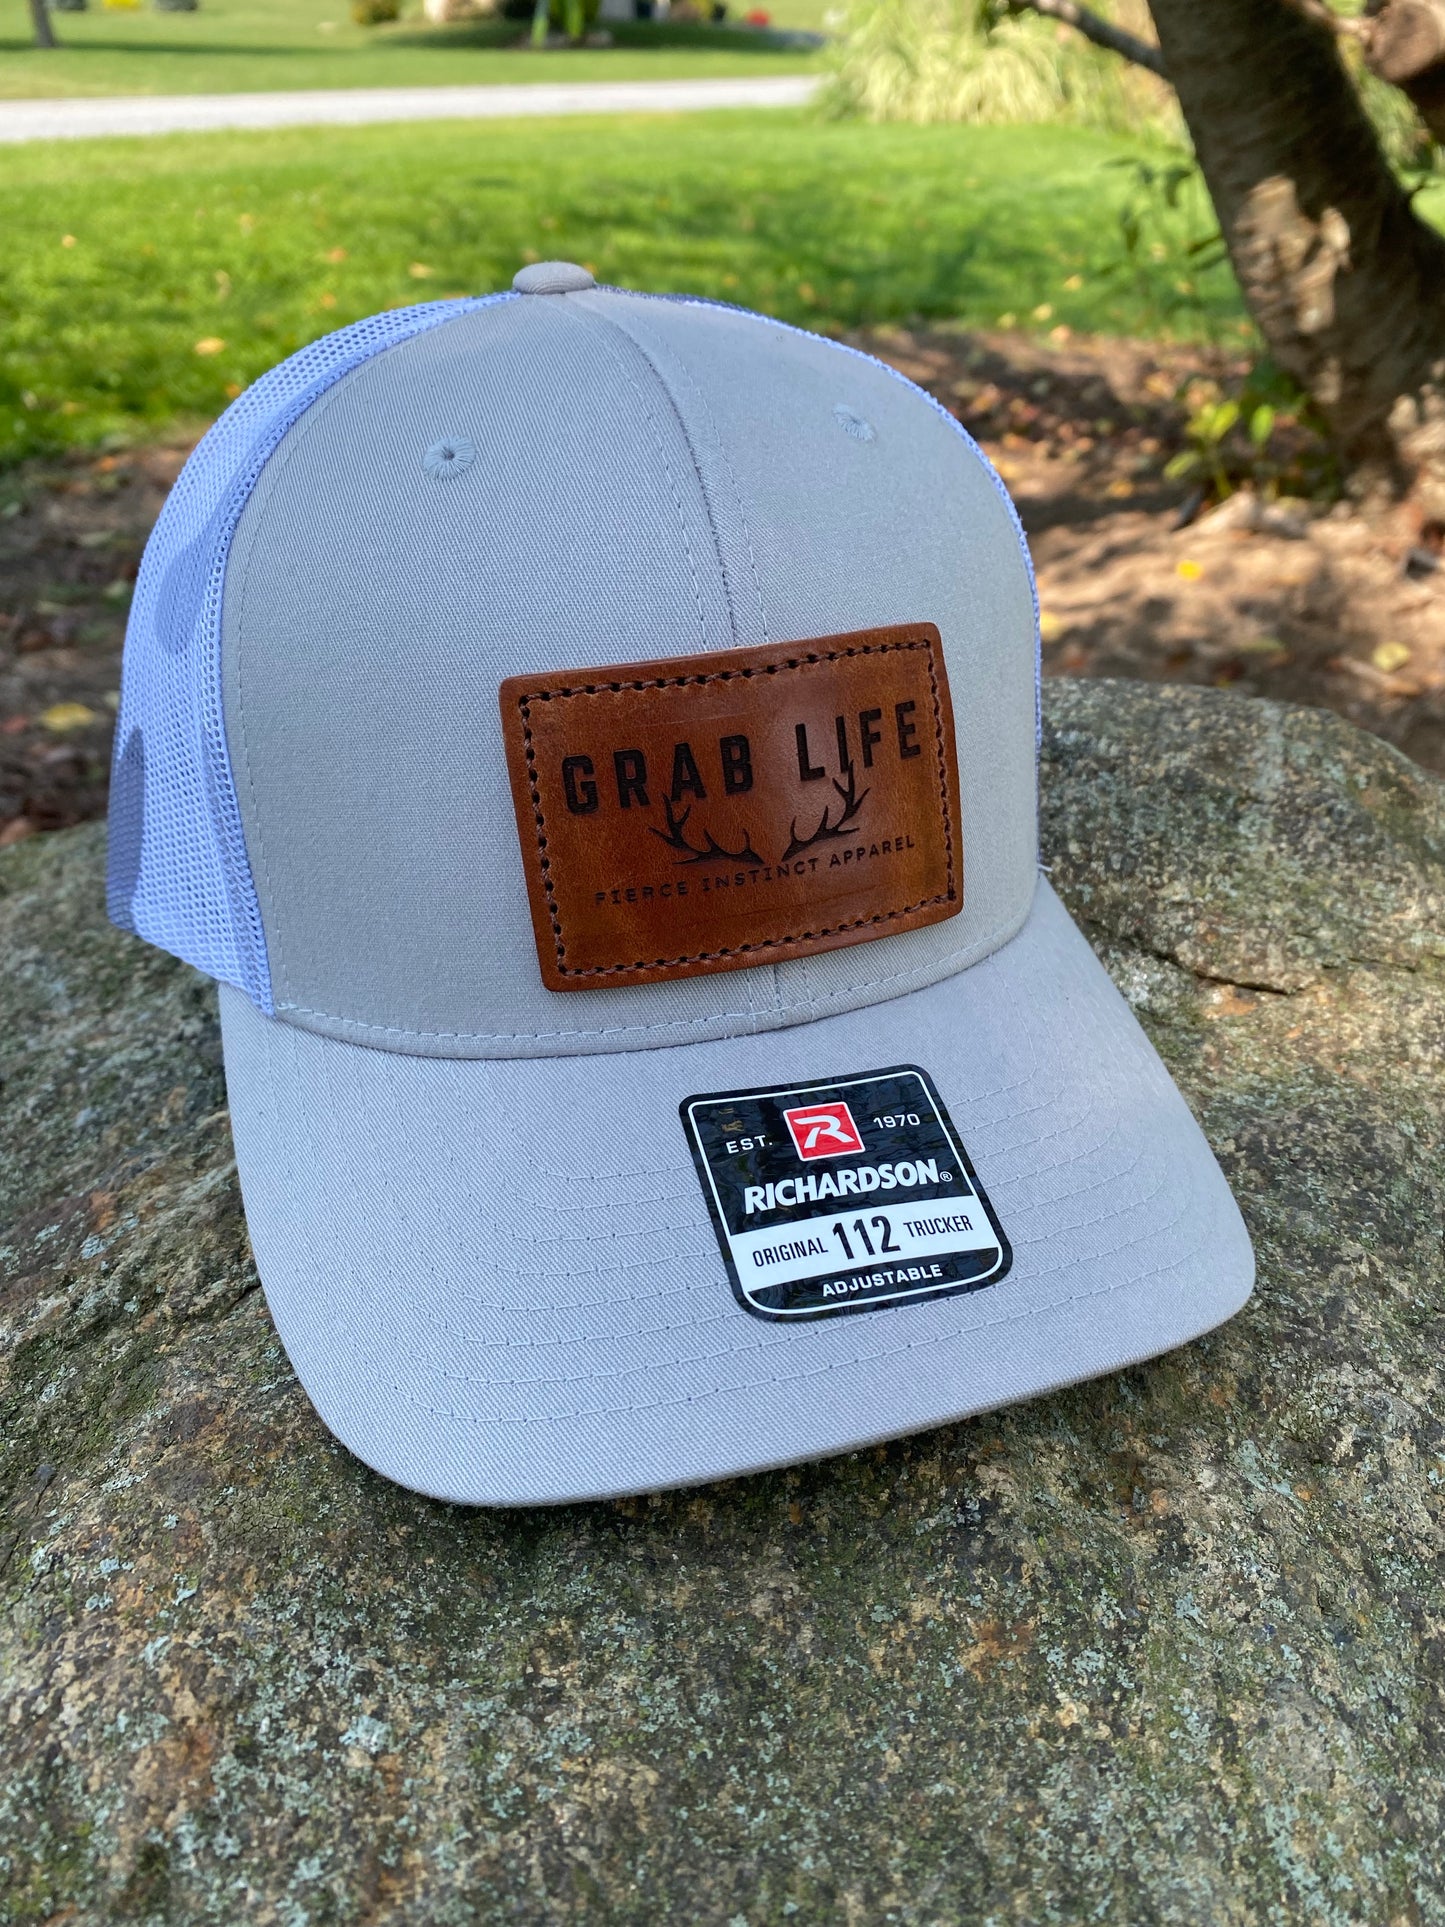 Grab Life - Grey/Camo Trucker Hat